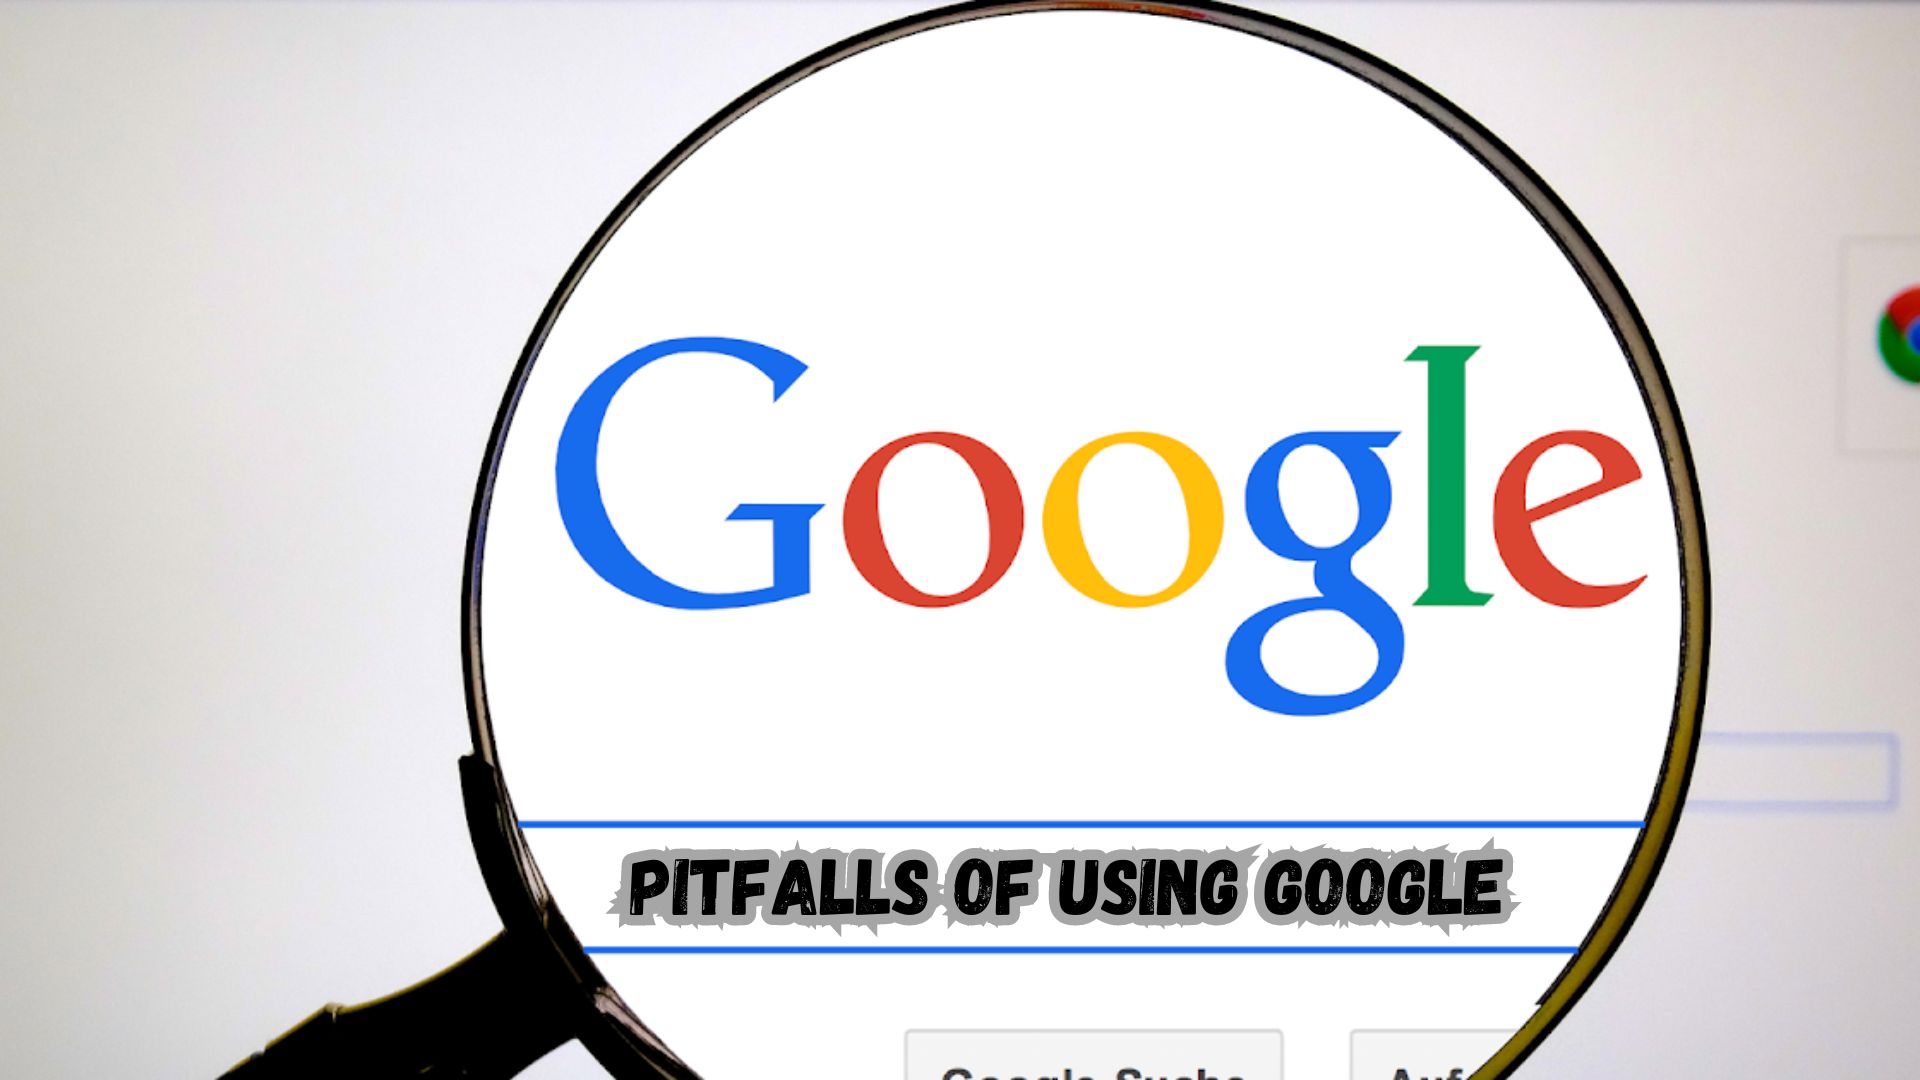 Pitfalls of Using Google.